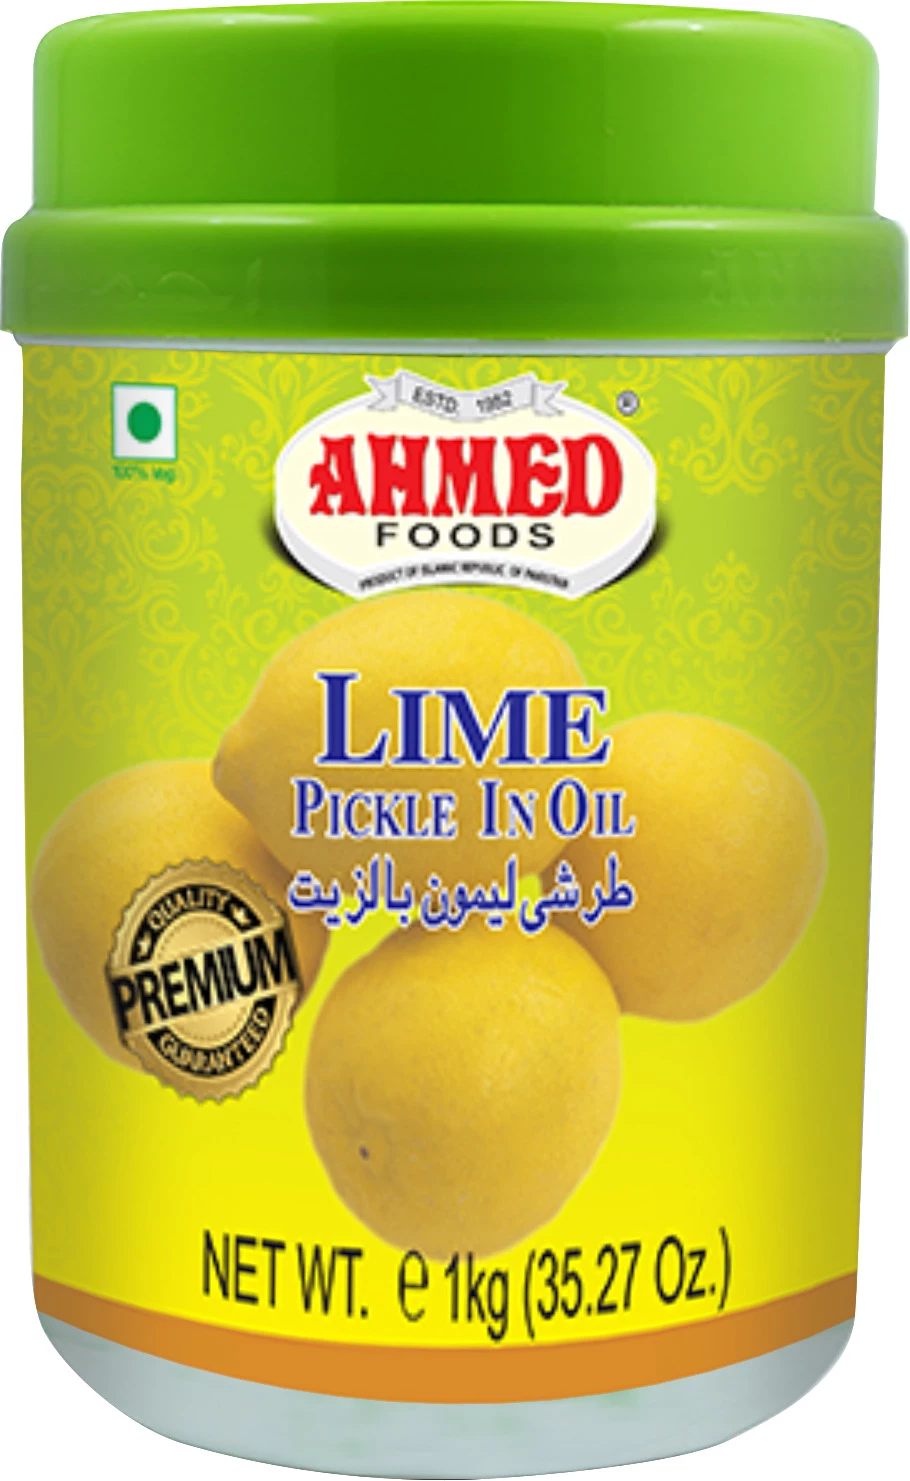 Sottaceto Al Lime Con Olio 6 X 1 Kg - Ahmed